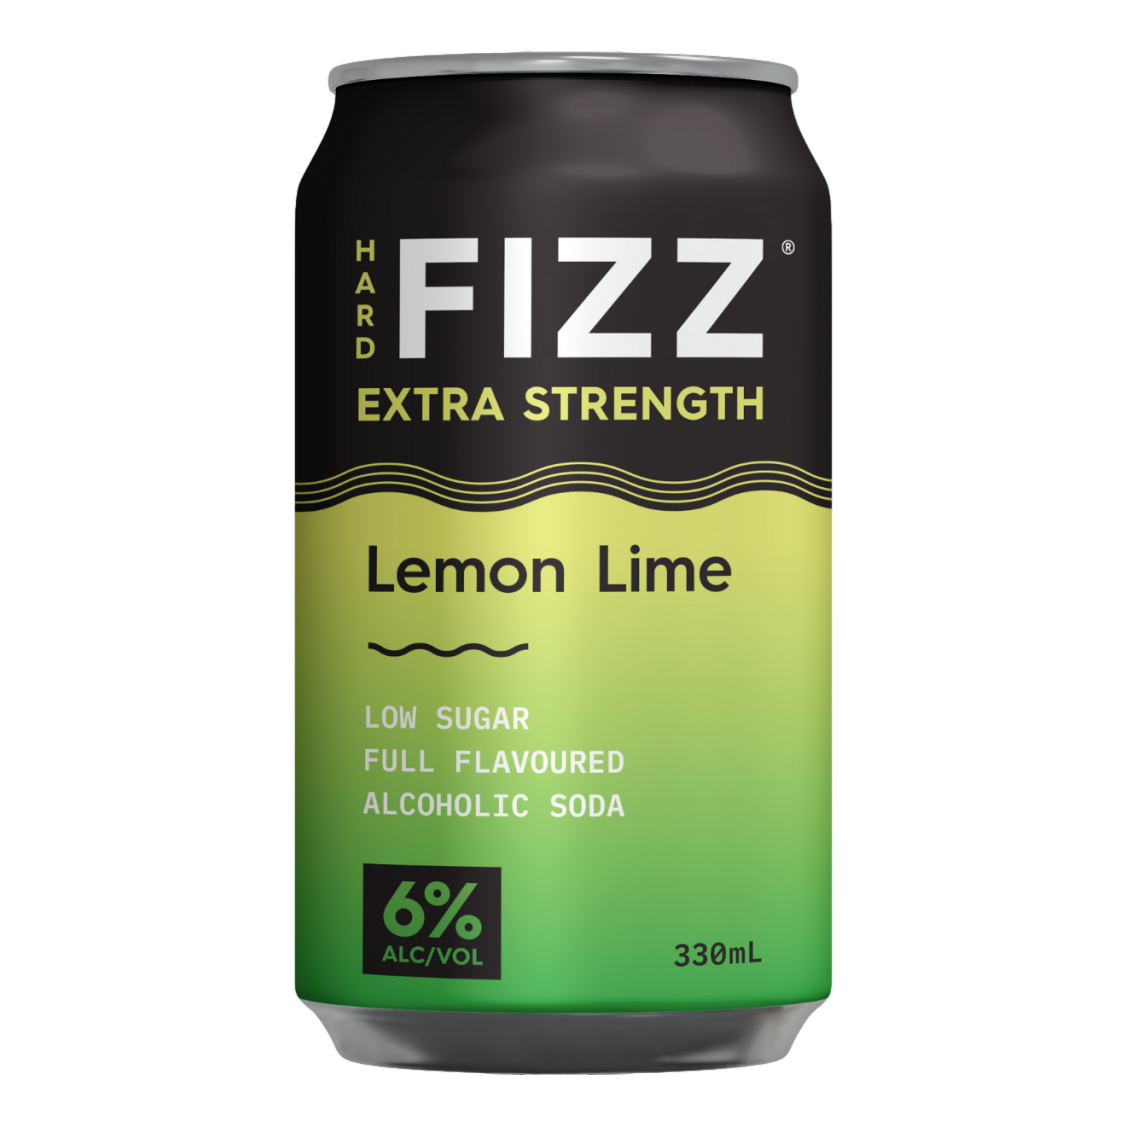 Hard Fizz Extra Lemon Lime Alcoholic Soda 6% 330ml Can 4 Pack